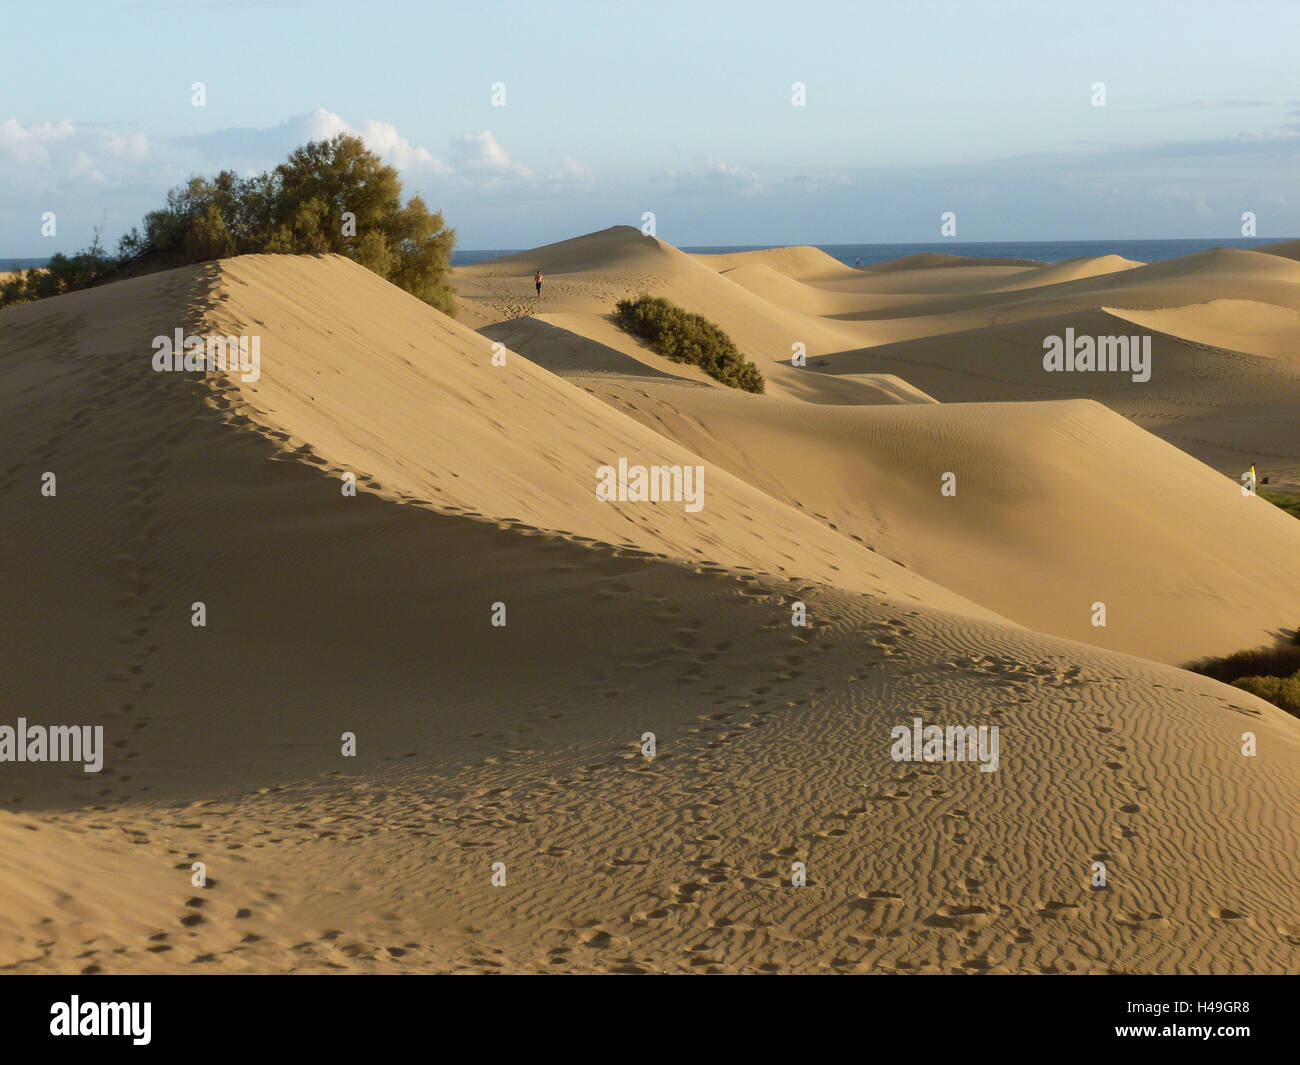 Grain Canaria, Maspalomas, Sand dunes, shrubs, wanderers, the Atlantic, Stock Photo